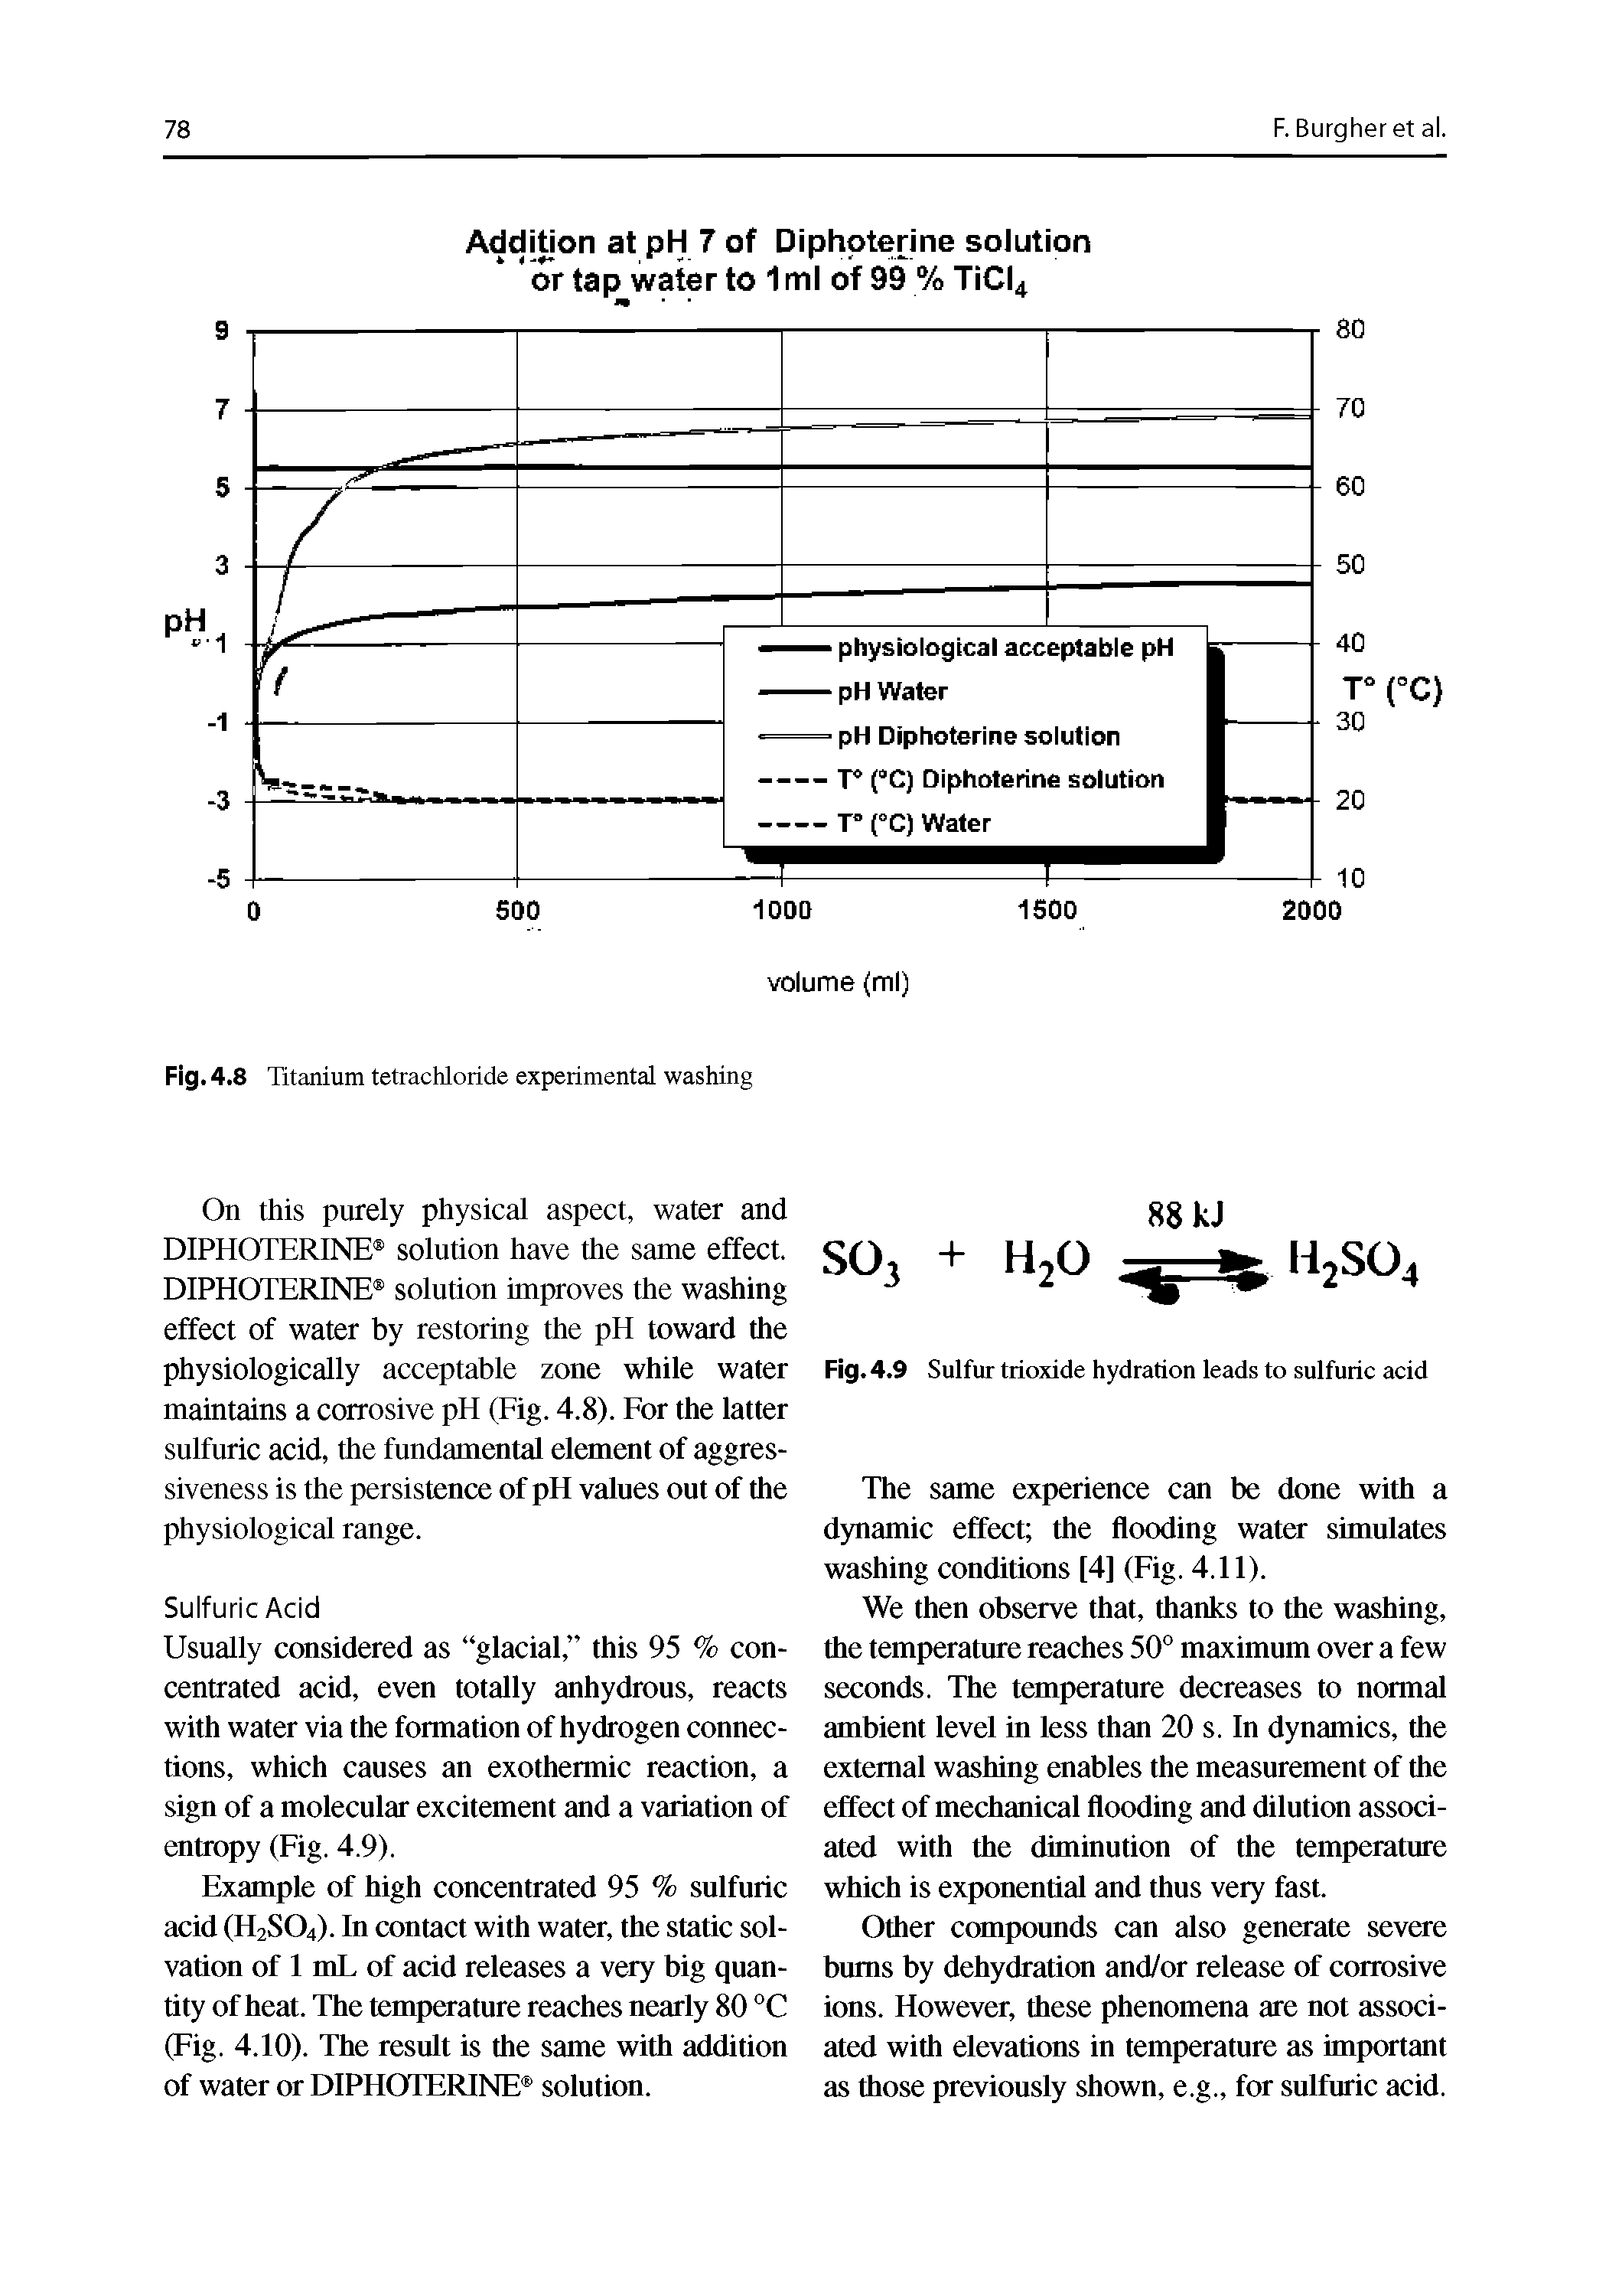 Fig.4.9 Sulfur trioxide hydration leads to sulfuric acid...